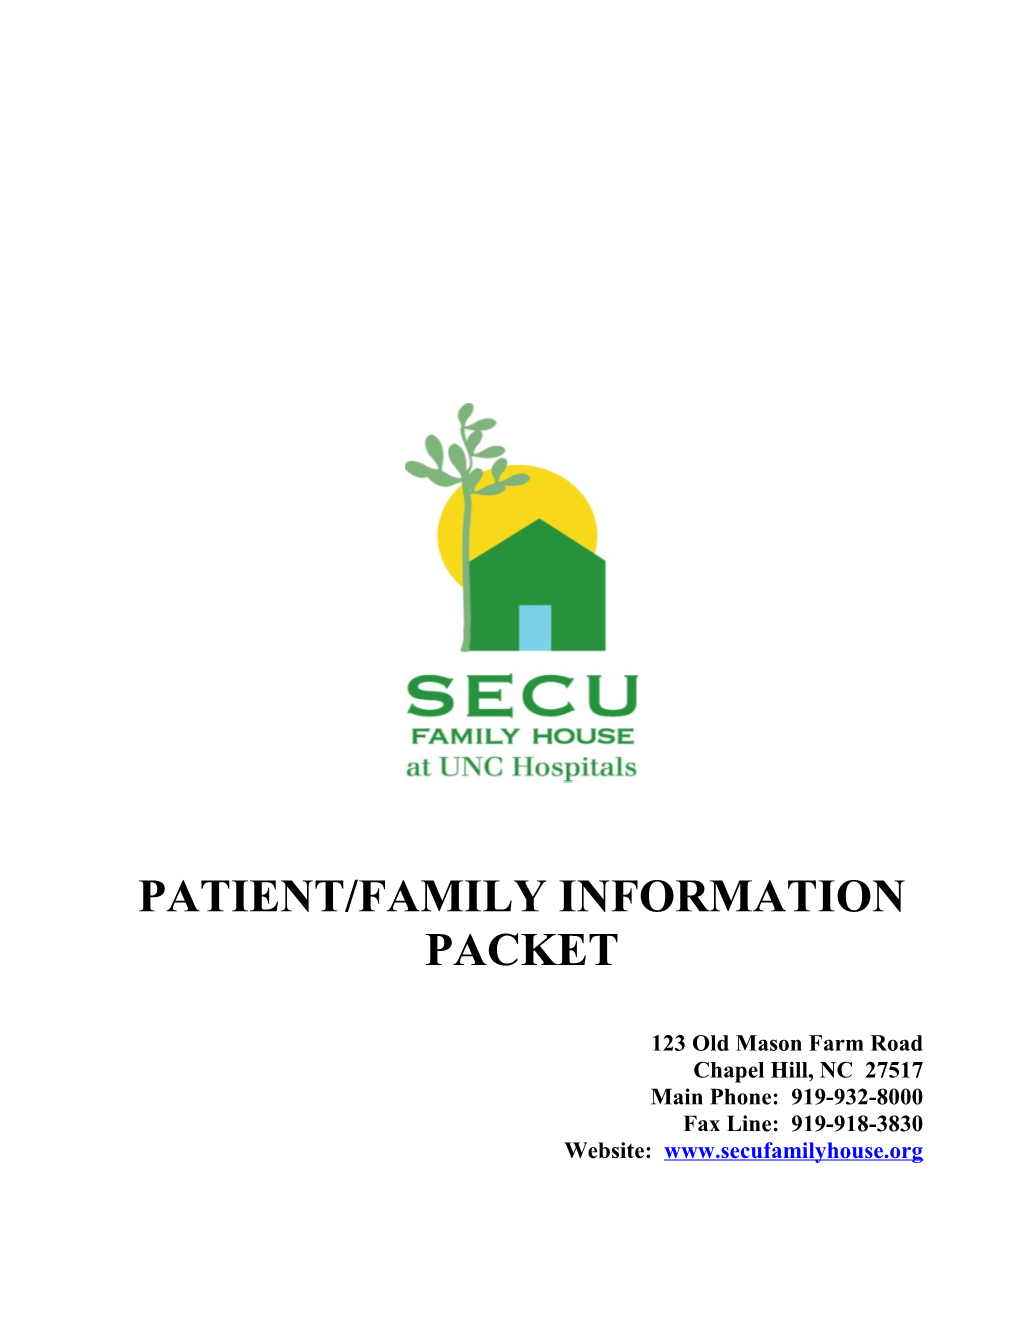 Logo Secu Family House